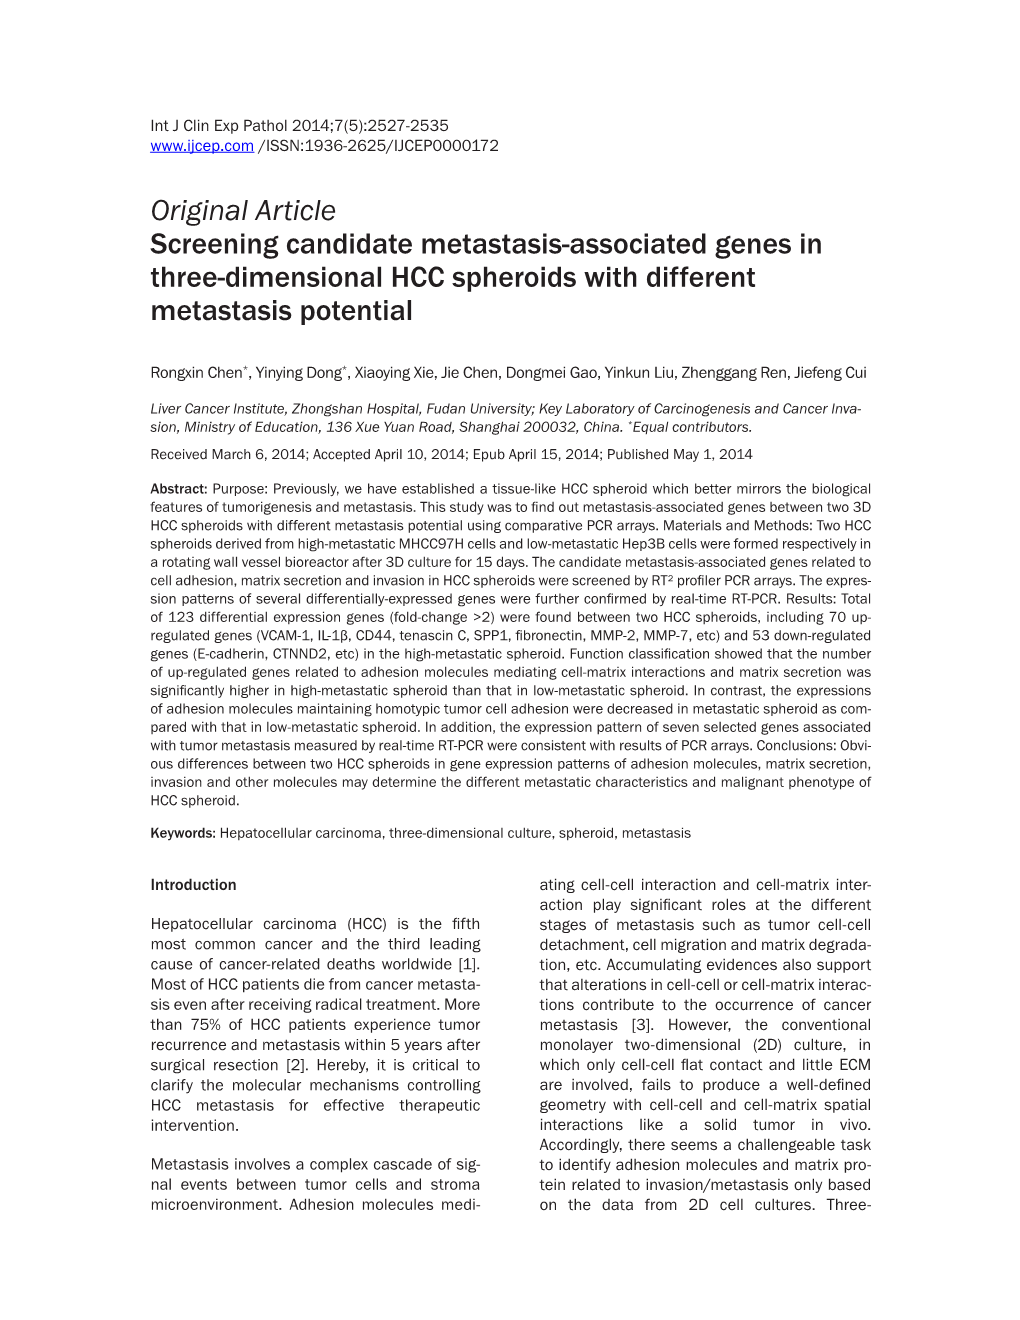 Original Article Screening Candidate Metastasis-Associated Genes in Three-Dimensional HCC Spheroids with Different Metastasis Potential